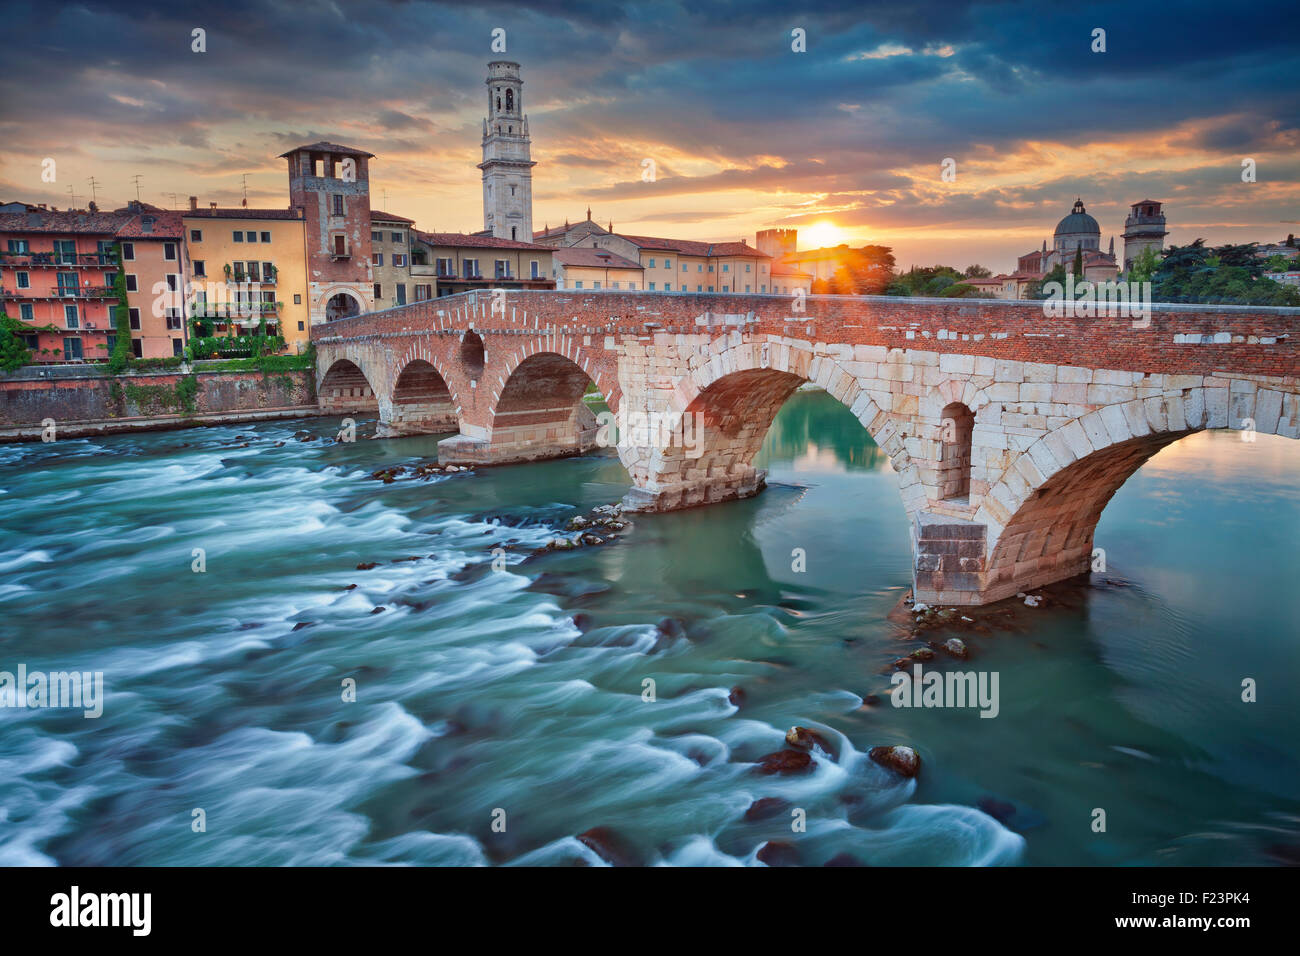 Verona. Image of Verona, Italy during summer sunset. Stock Photo